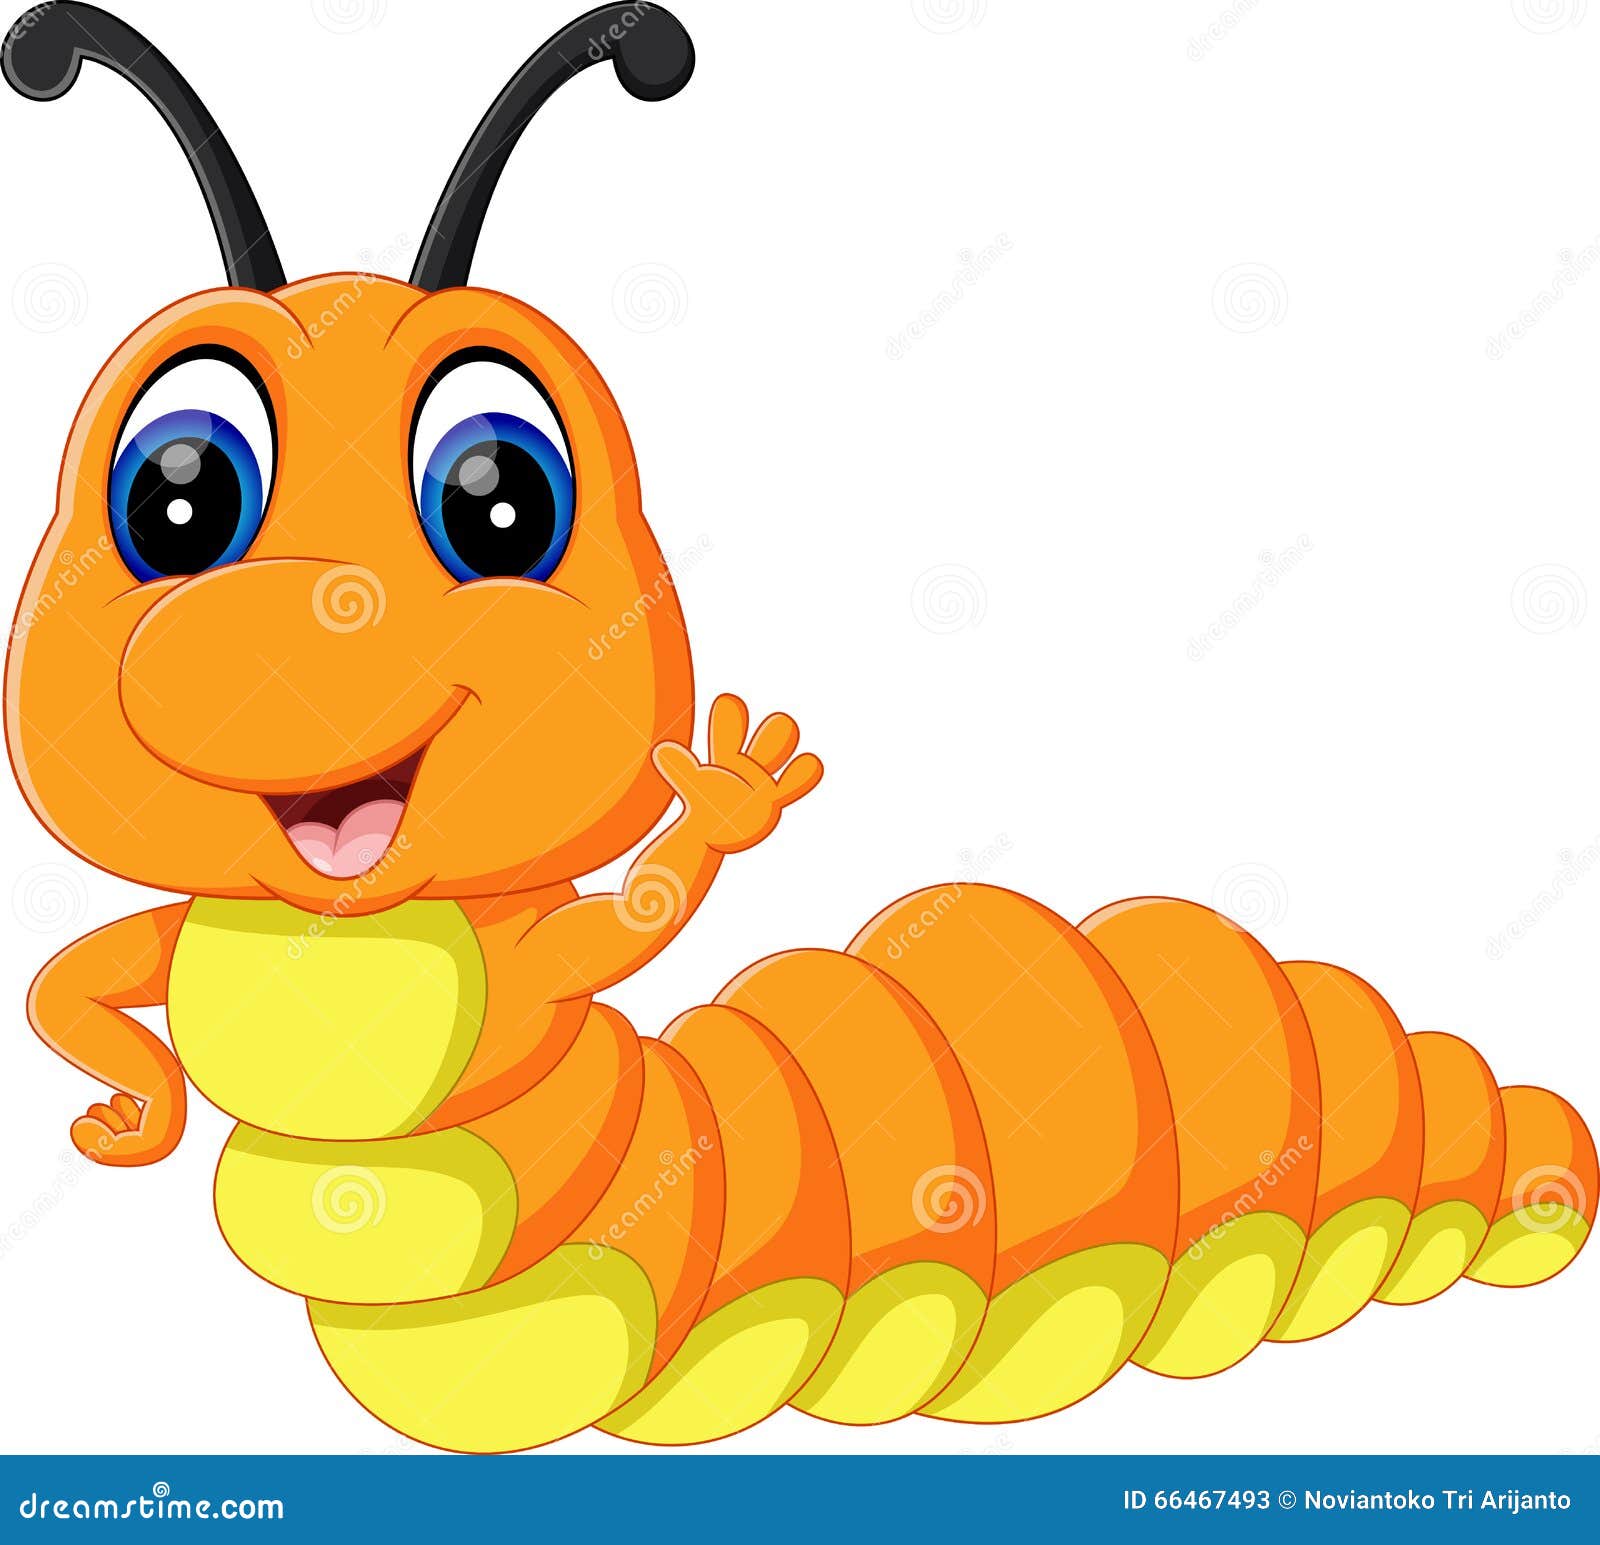 Cute caterpillar cartoon stock vector. Illustration of antenna - 66467493